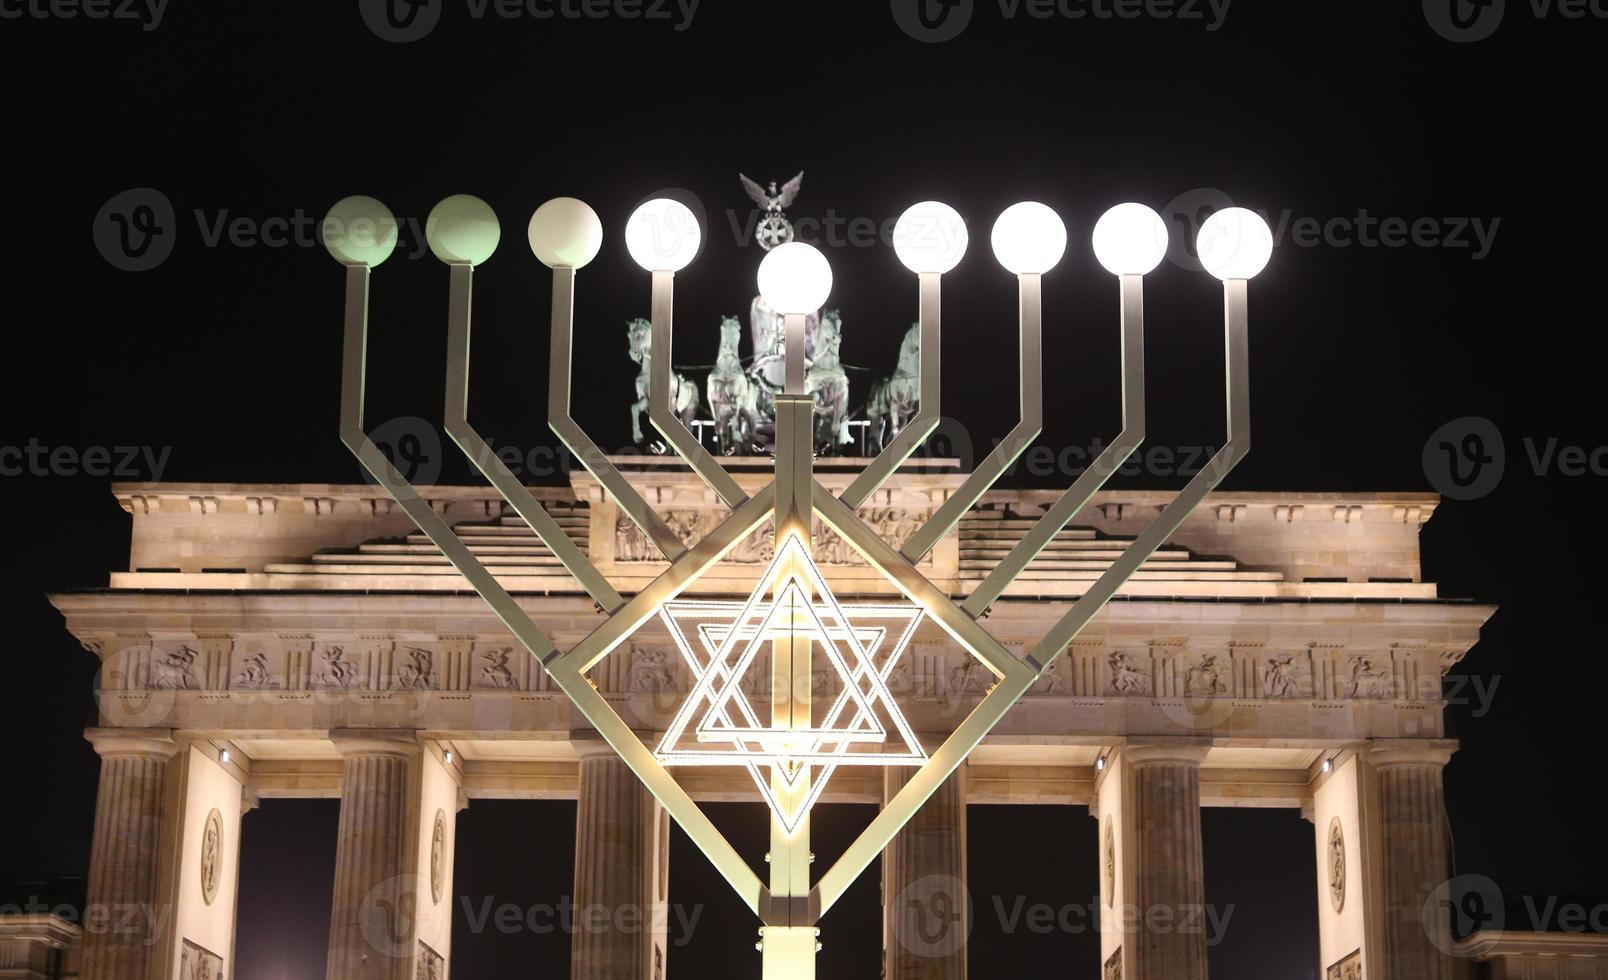 menorah durante hanukkah em pariser platz, berlim, alemanha foto